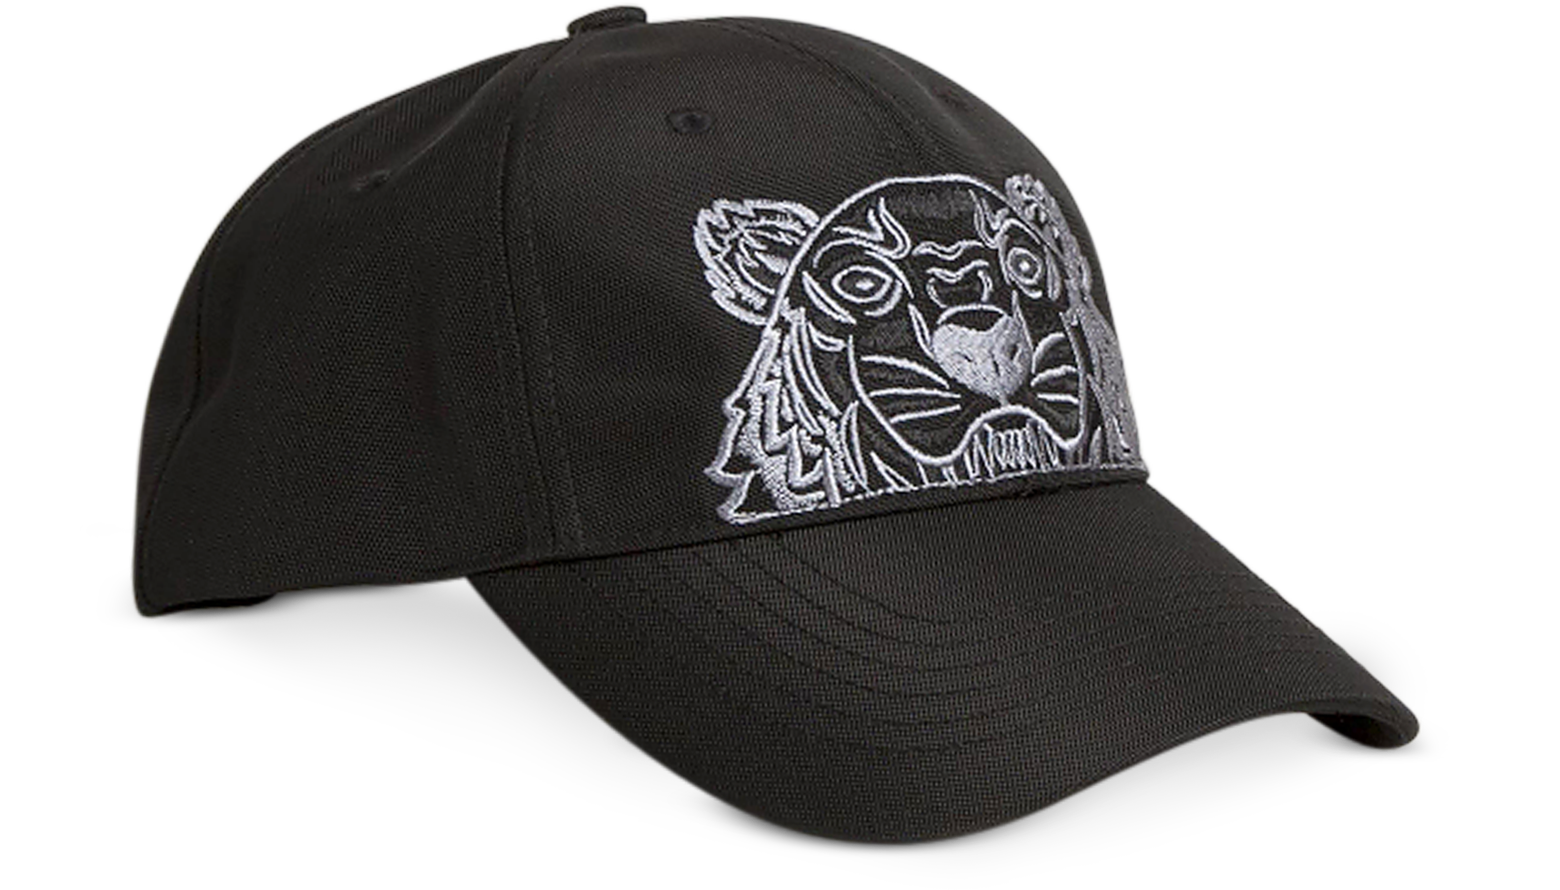 kenzo tiger hat